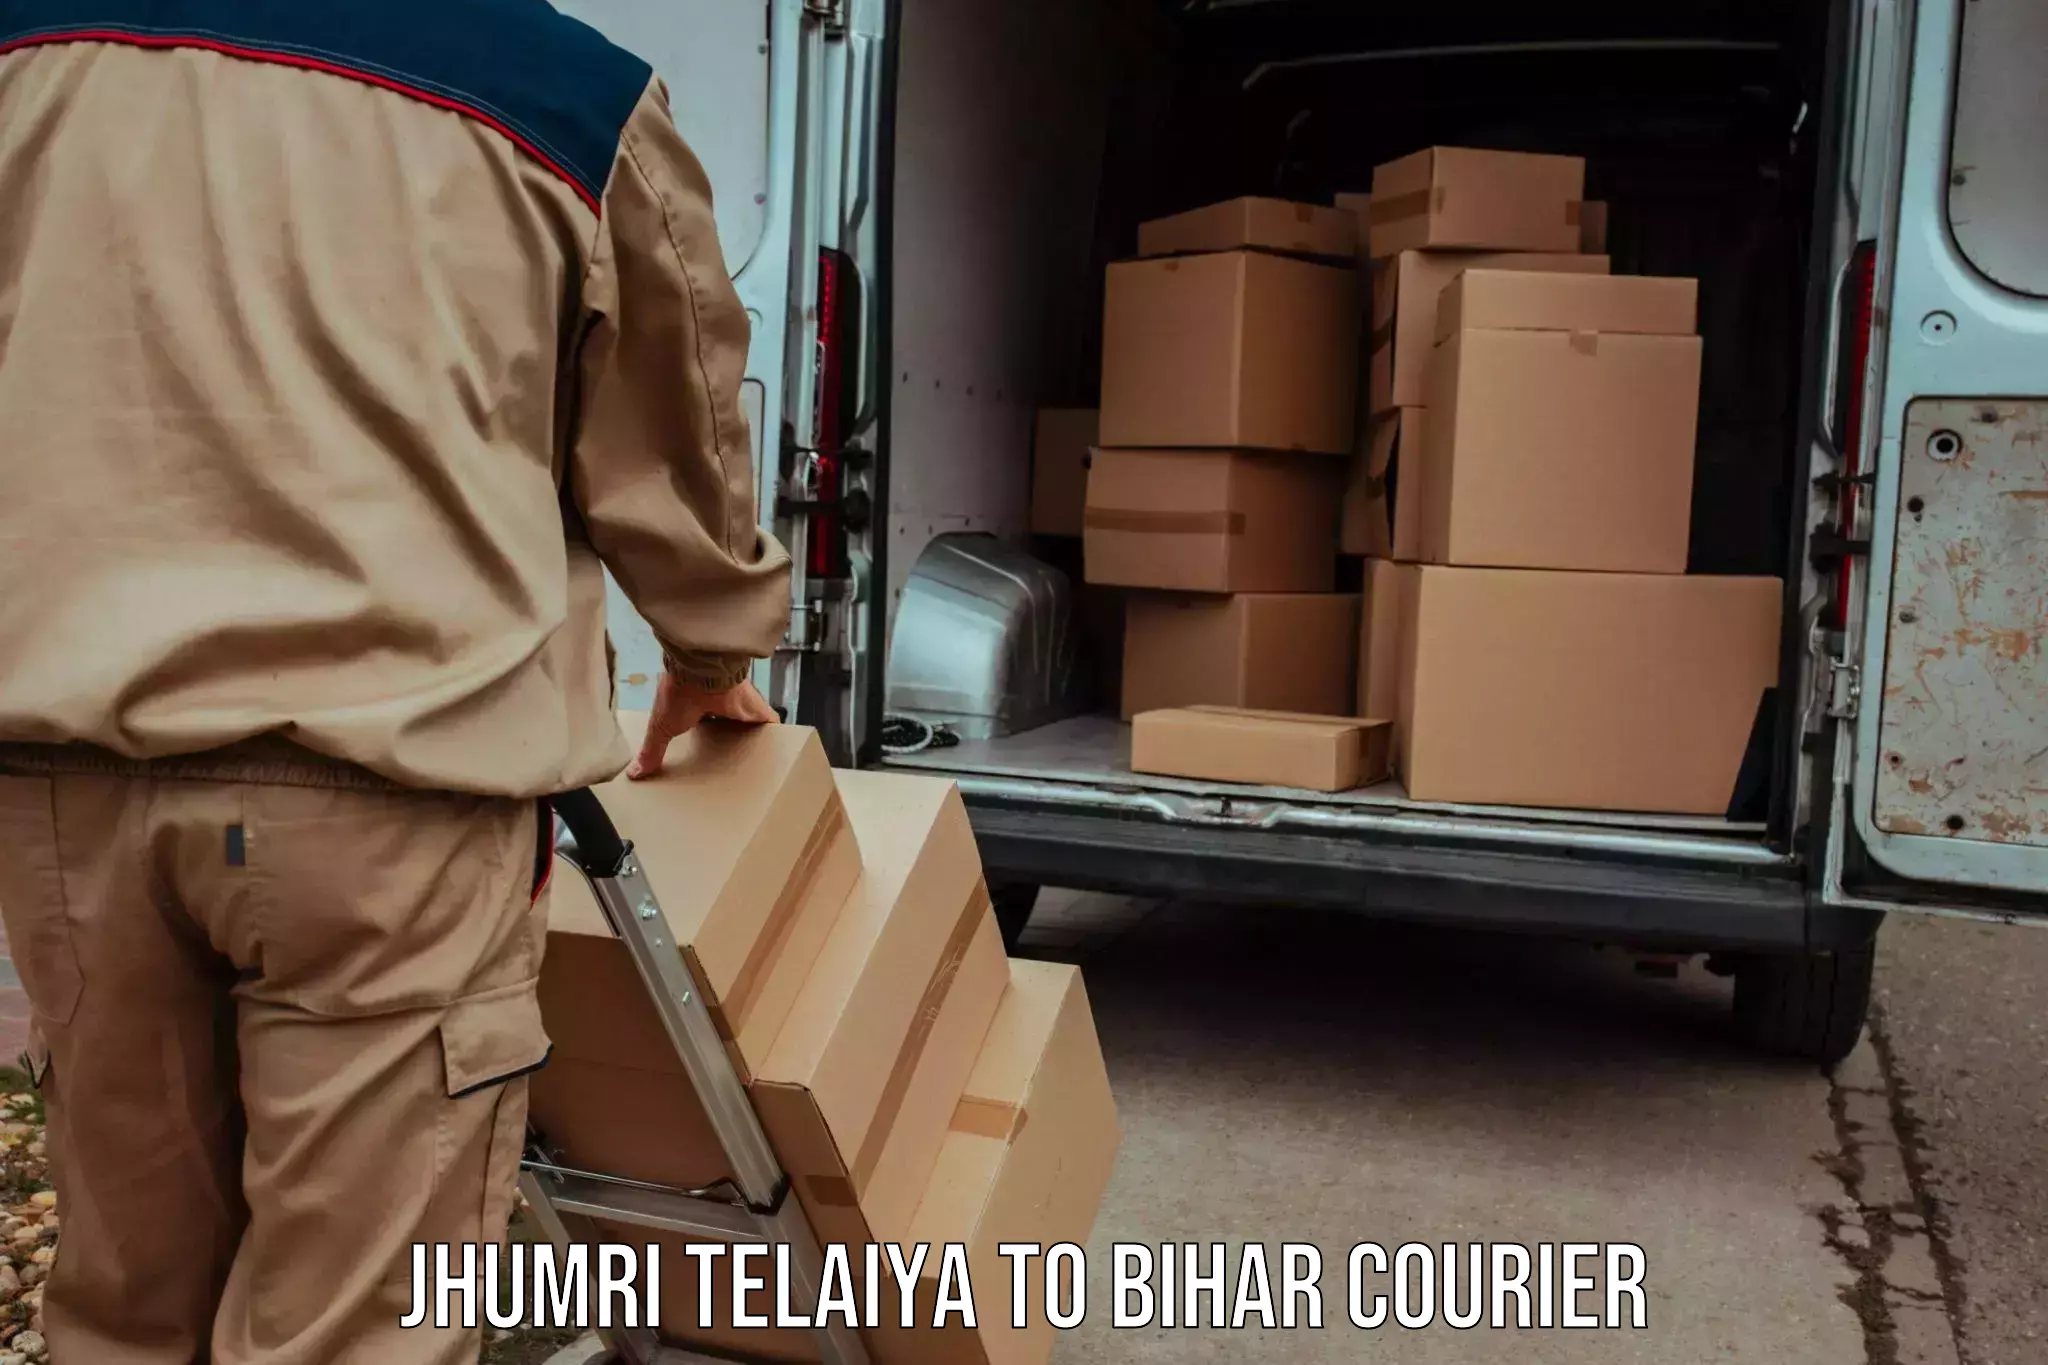 Courier service comparison Jhumri Telaiya to Bihta